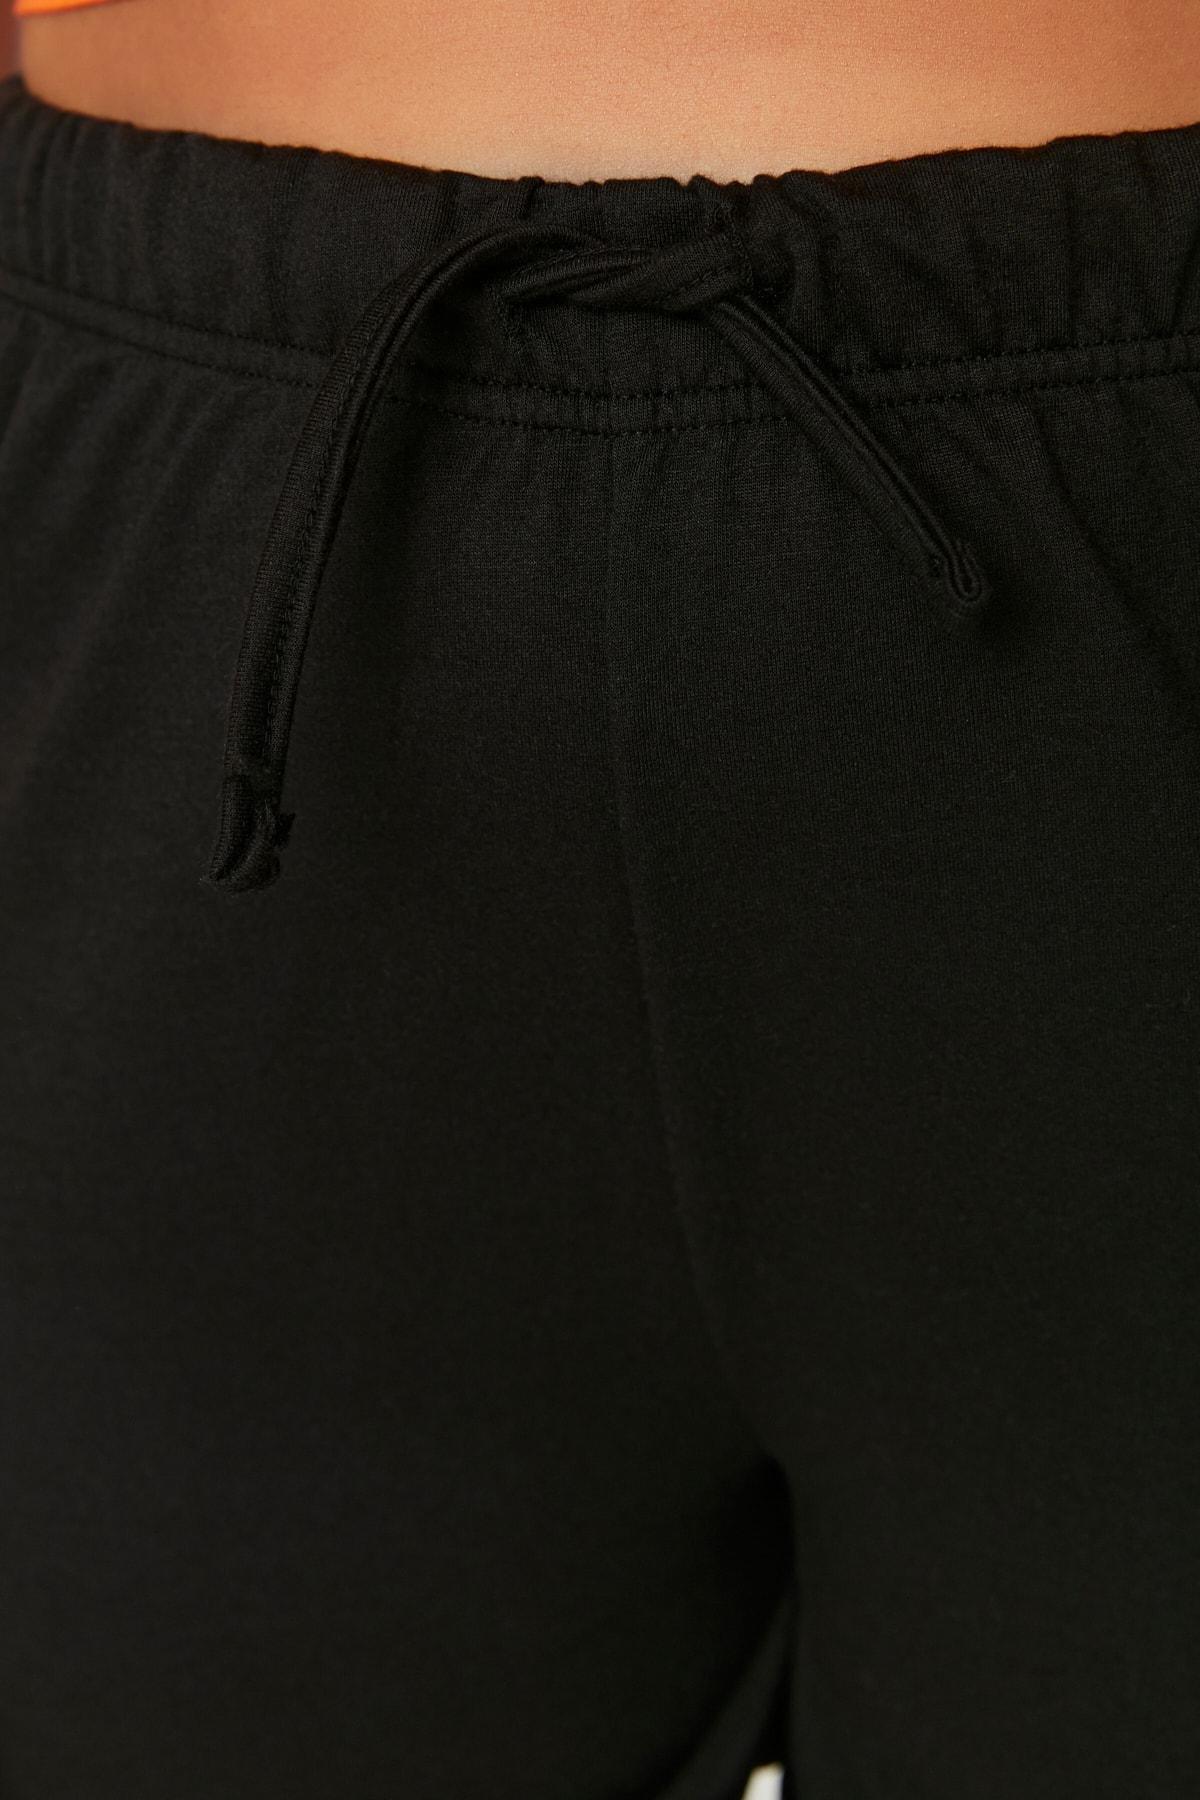 Trendyol - Black Relaxed Plus Size Shorts